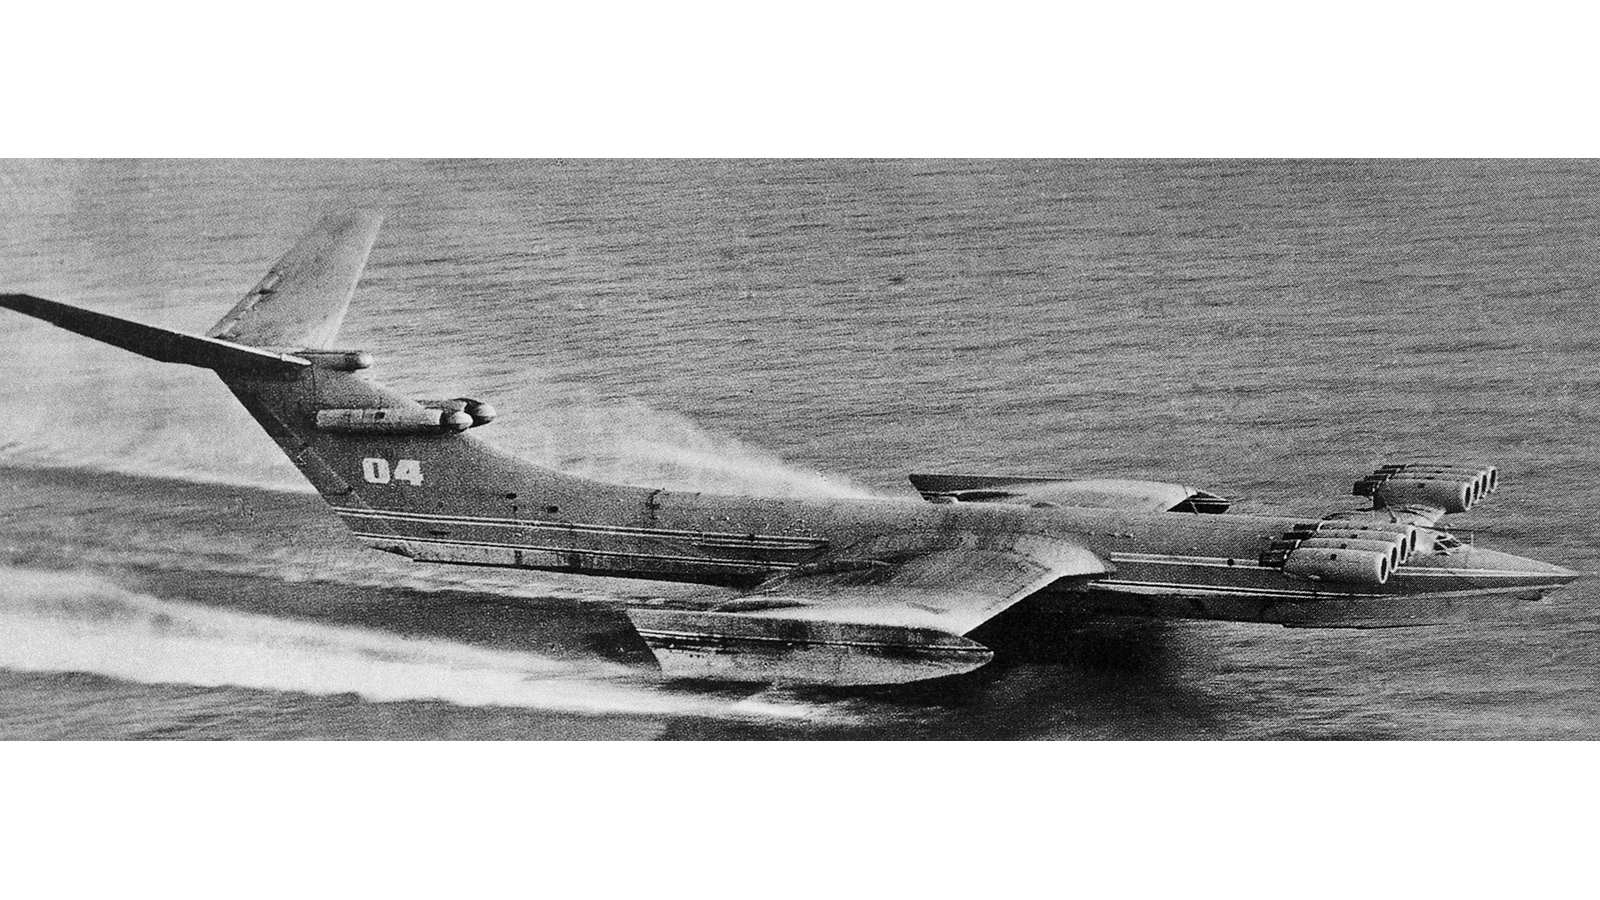 Caspian Sea Monster: See the Soviets' 1960s ekranoplan and modern hybrids |  CNN Travel